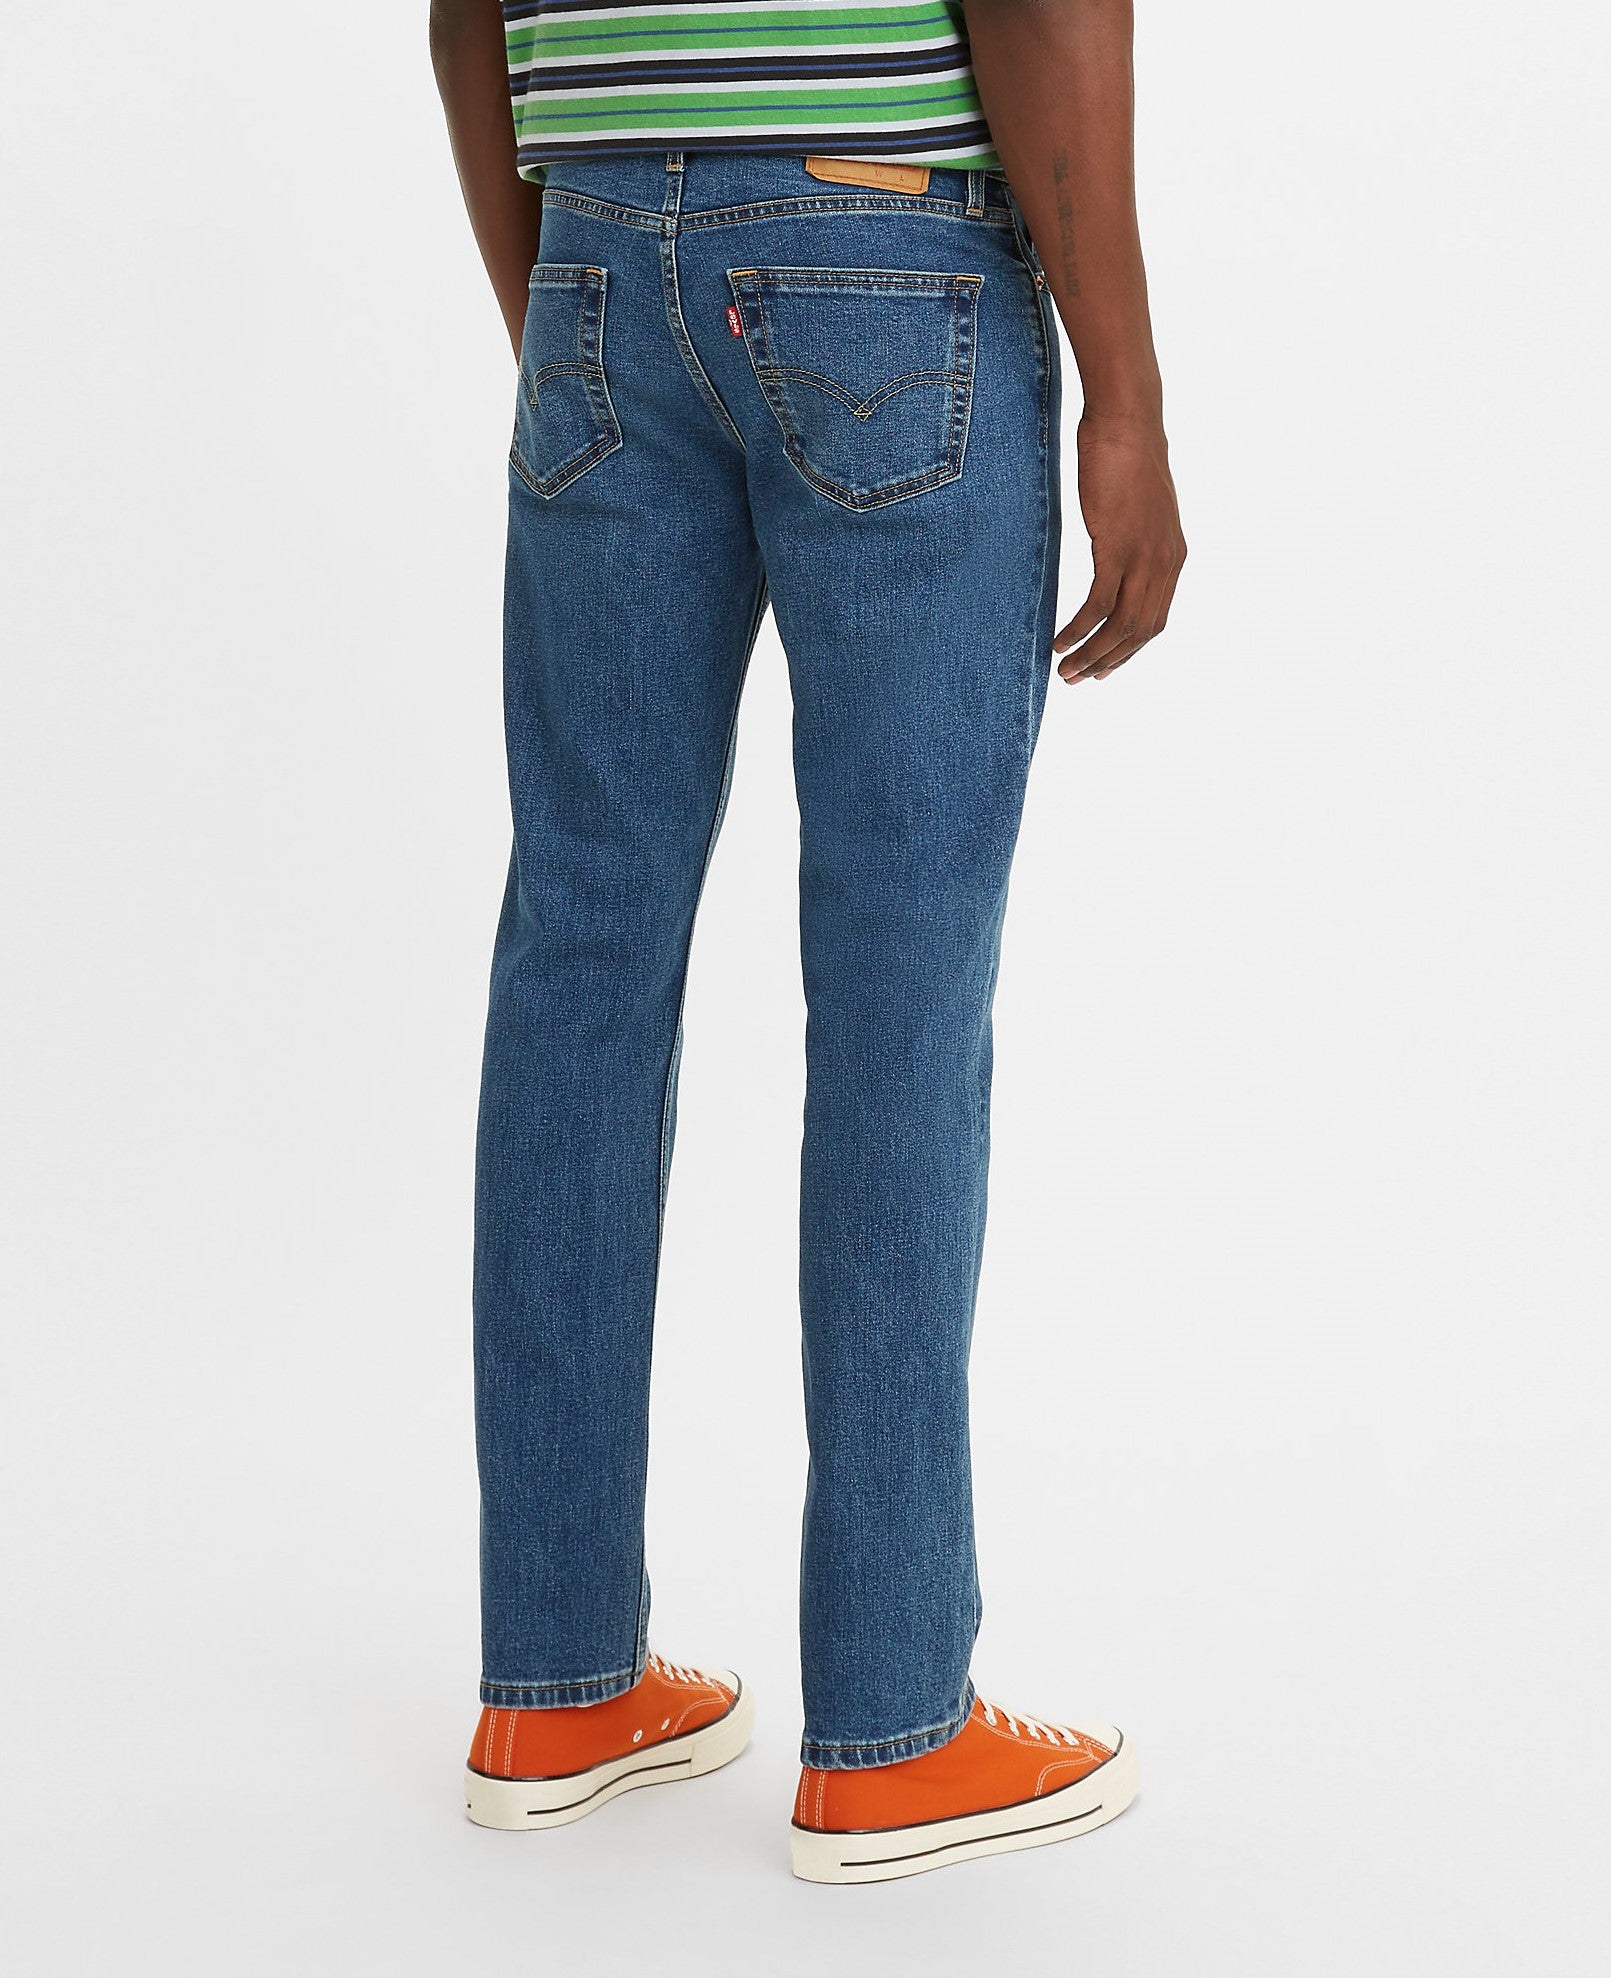 pantalon-jeans-levis-511-worn-in-p-caballeros